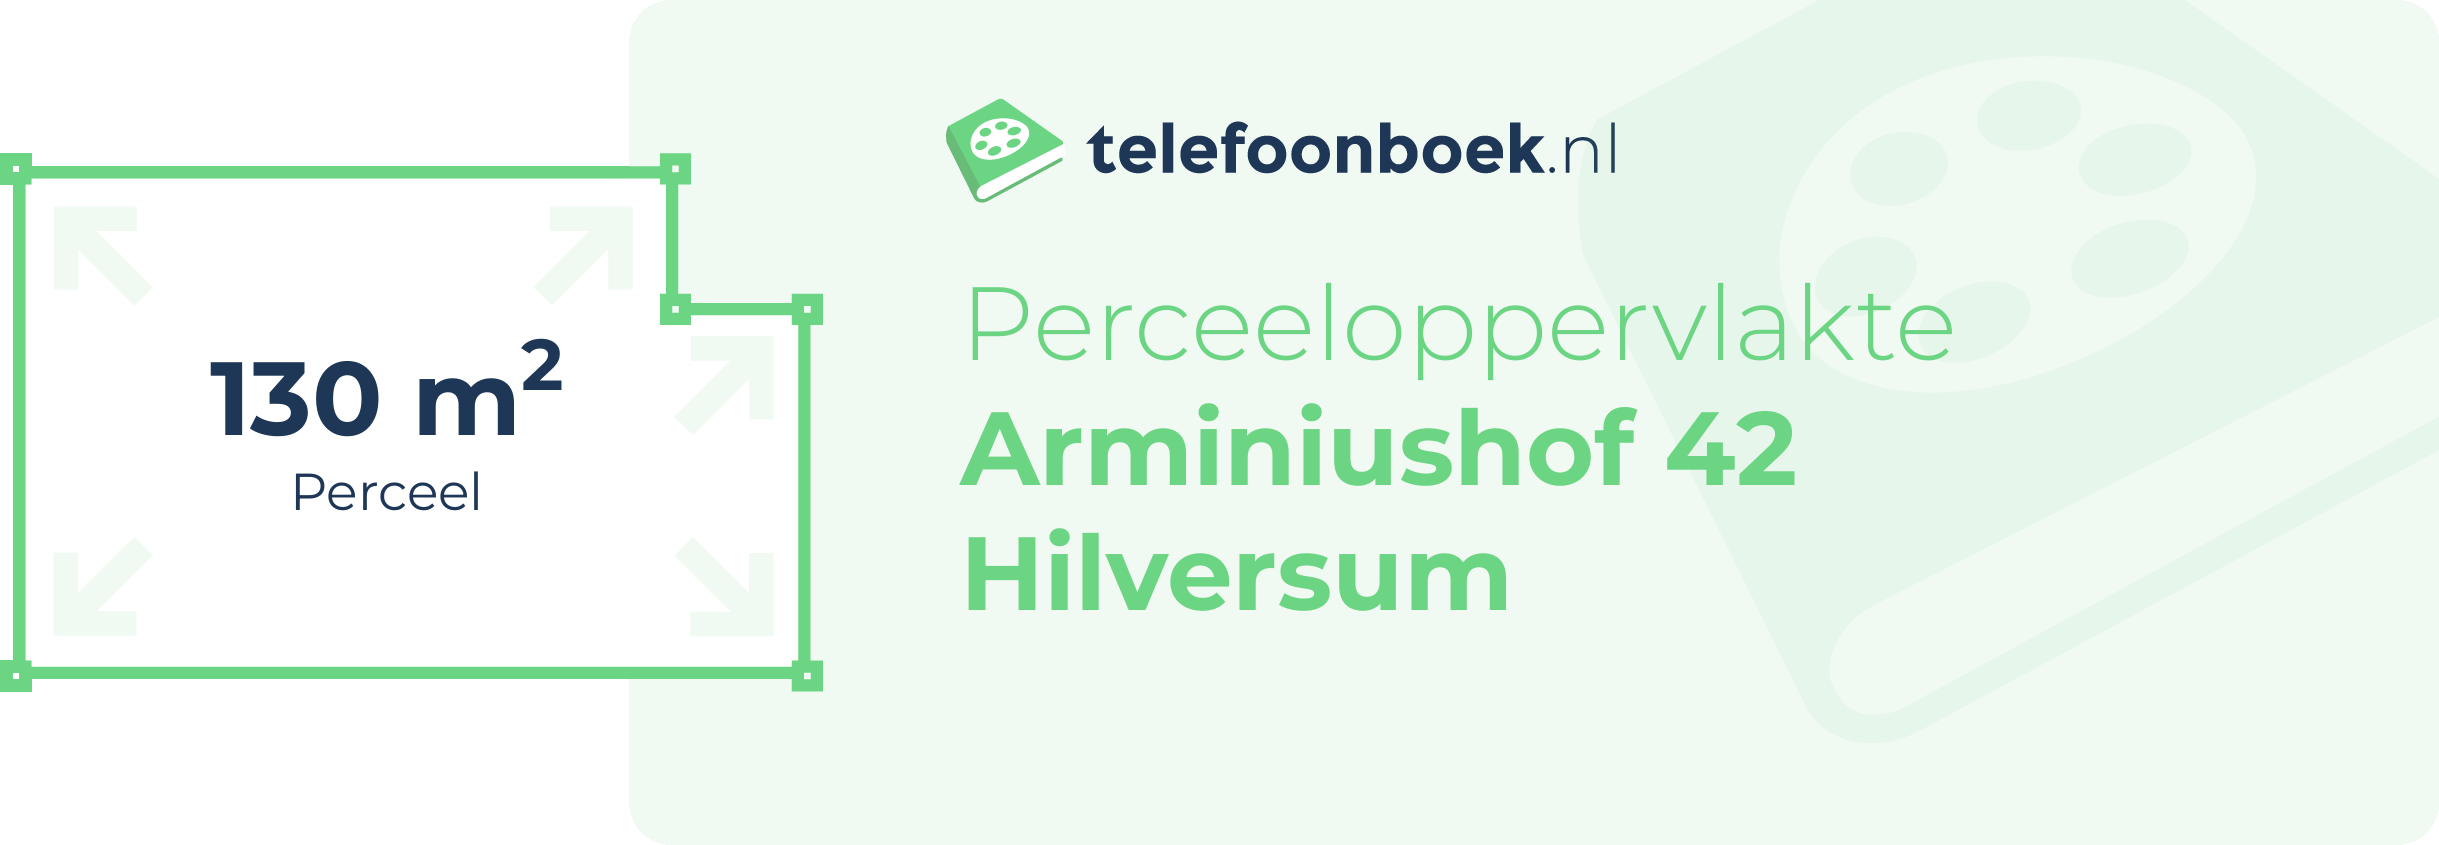 Perceeloppervlakte Arminiushof 42 Hilversum